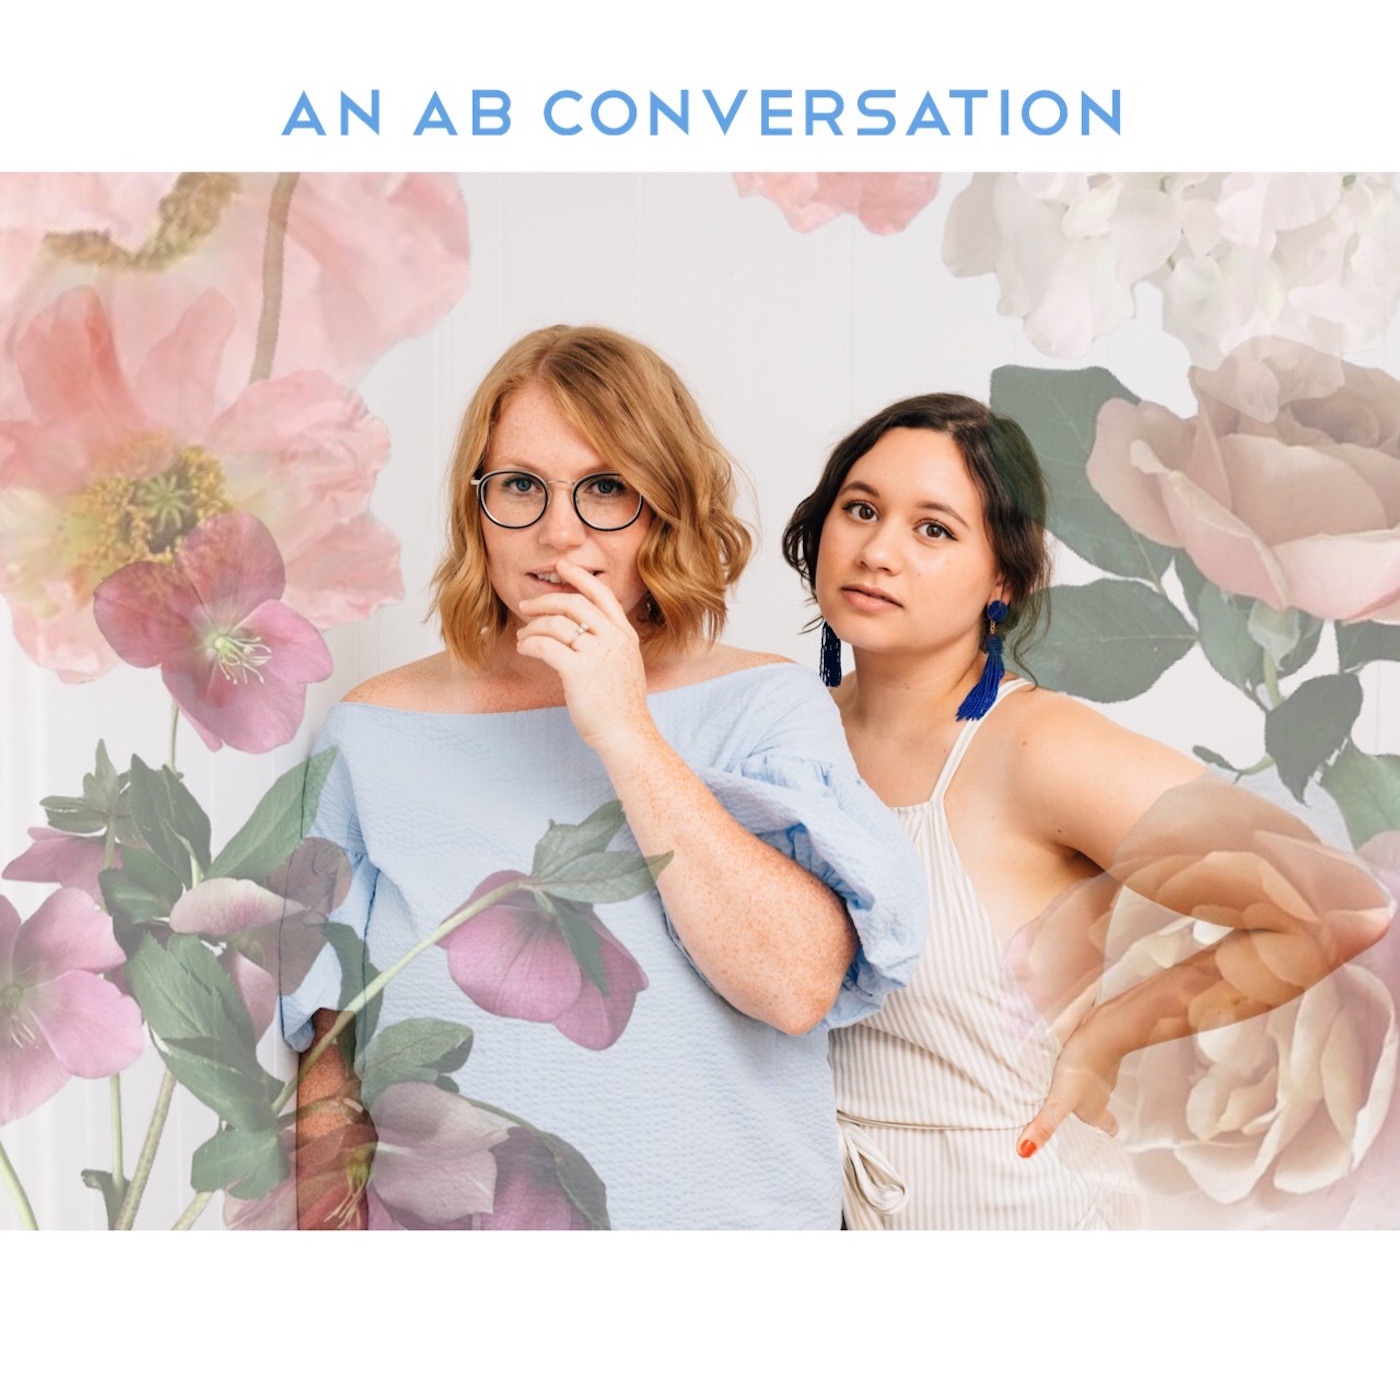 An AB Conversation